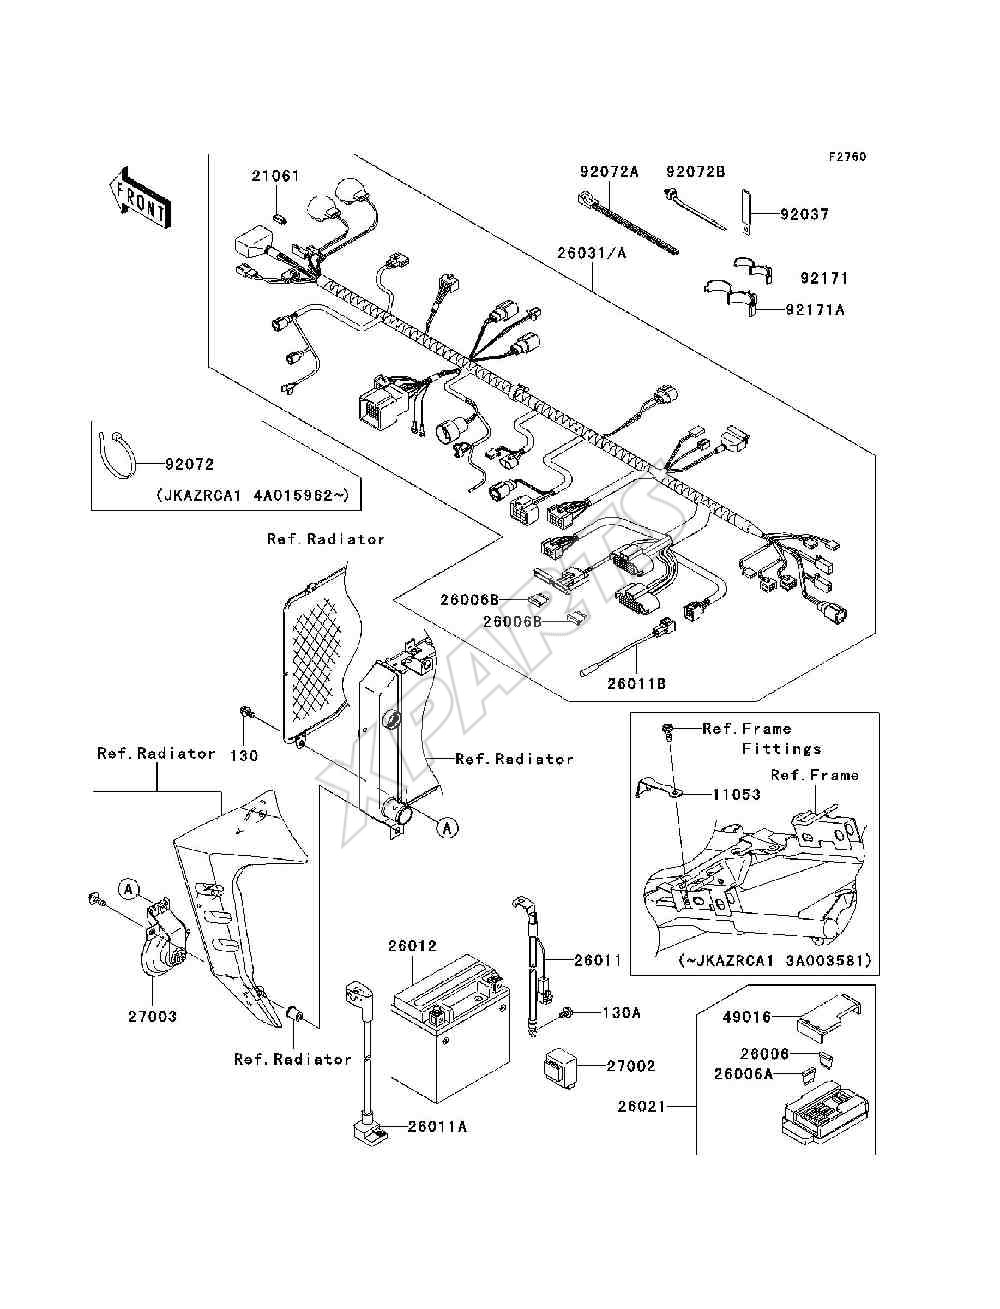 Bild für Kategorie Chassis Electrical Equipment(A1 / A2)